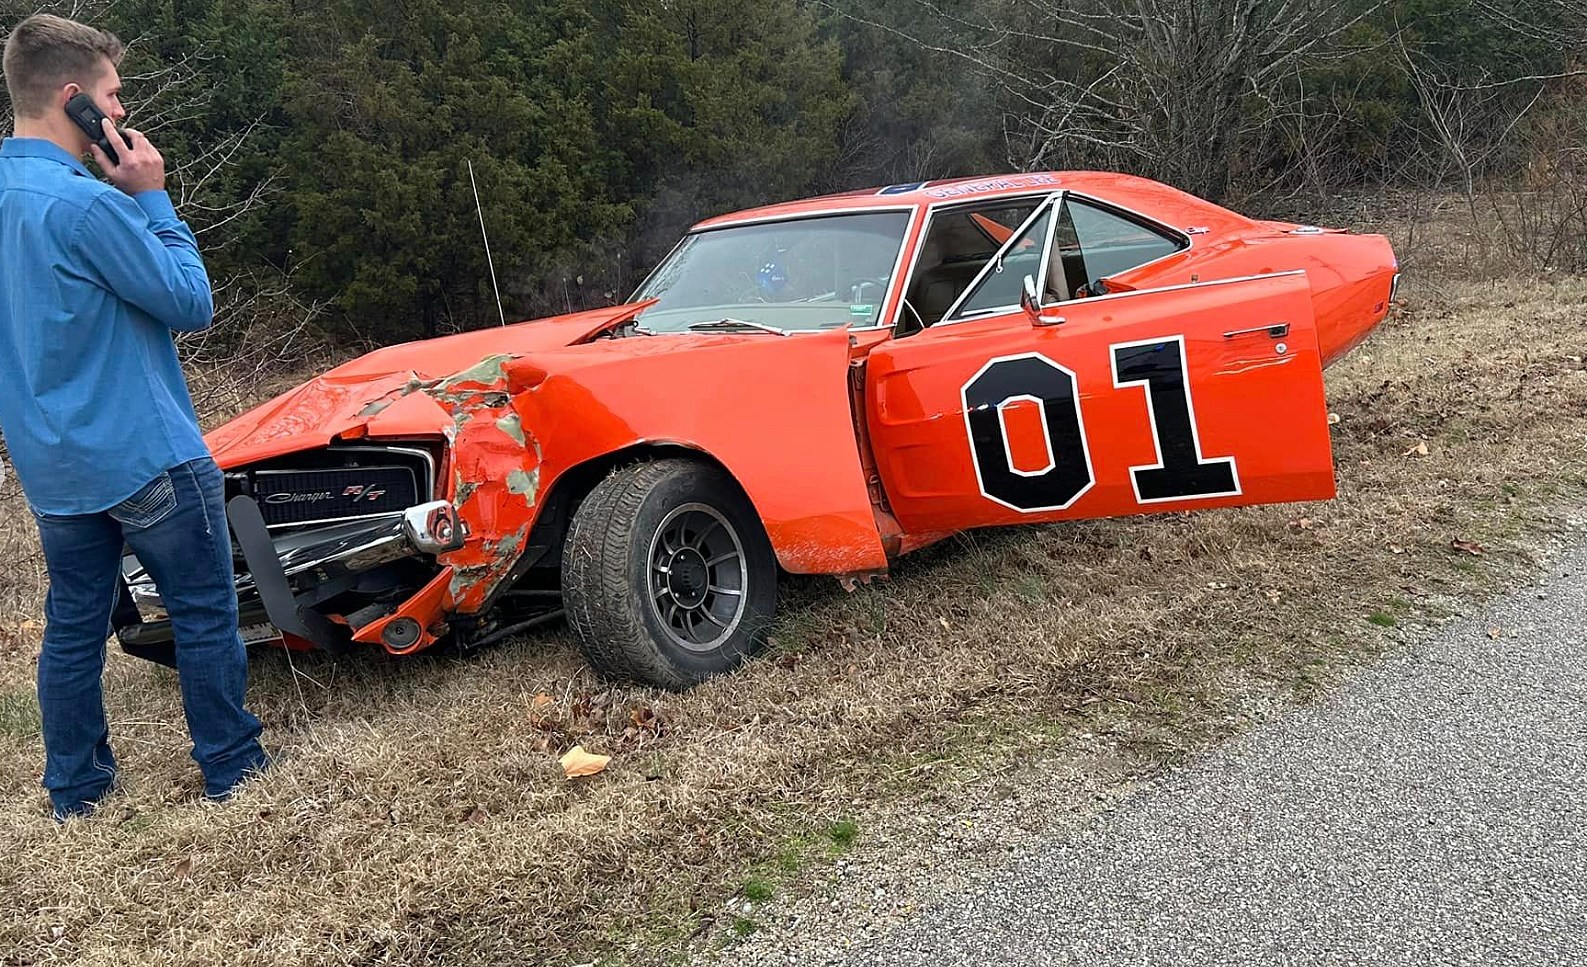 An Original Dukes of Hazzard Car Just Crashed in Missouri